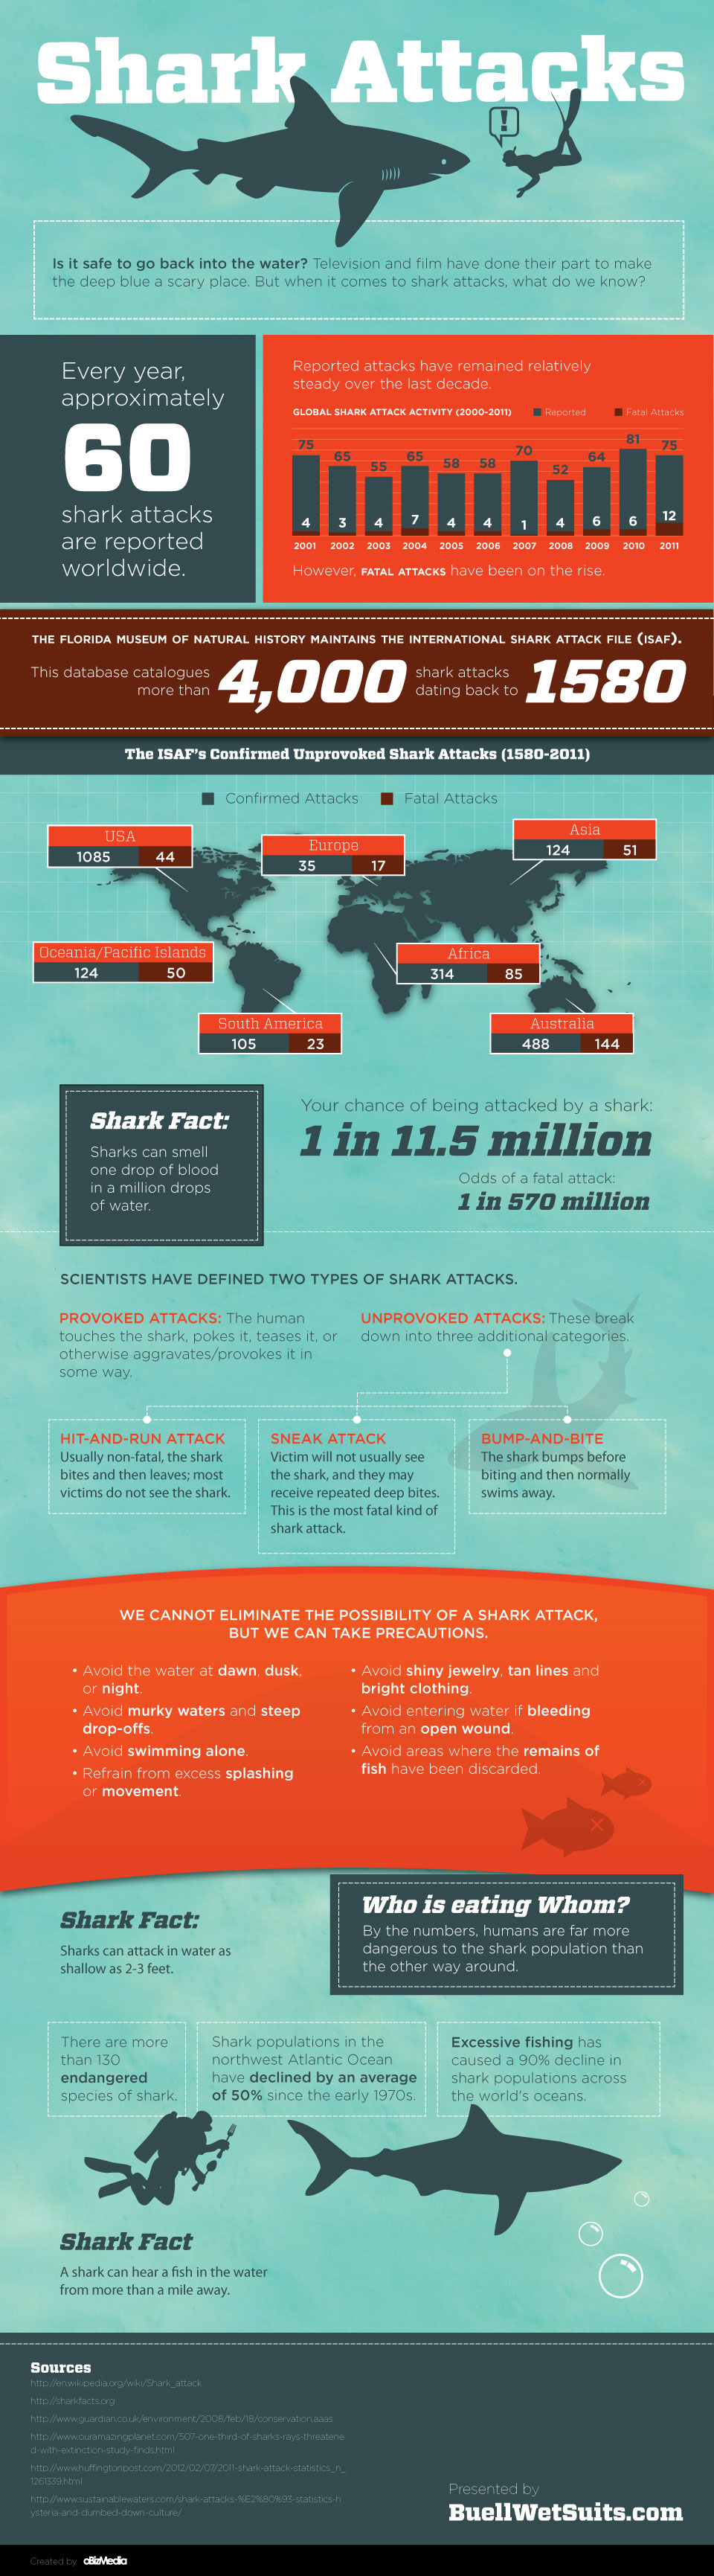 Anatomy of a Shark Attack